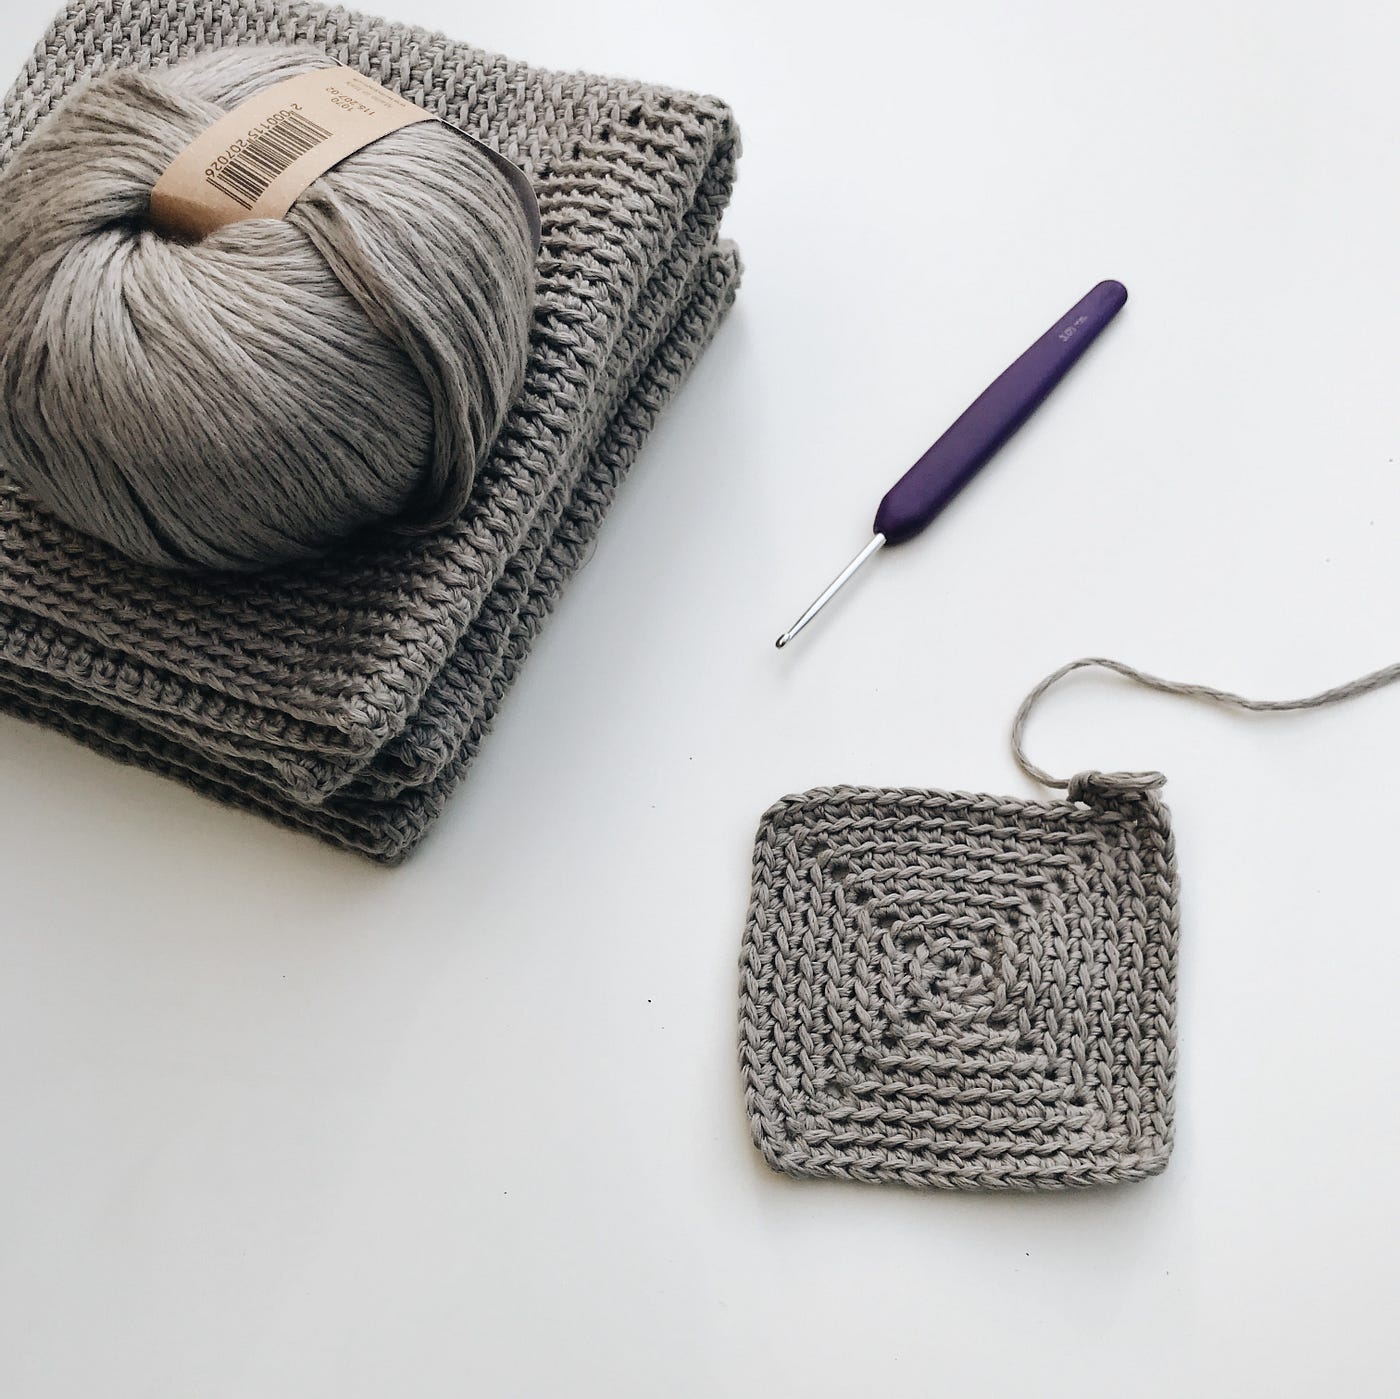 58 Piece Crochet Set With Yarn, Knitting Accessories, Crochet